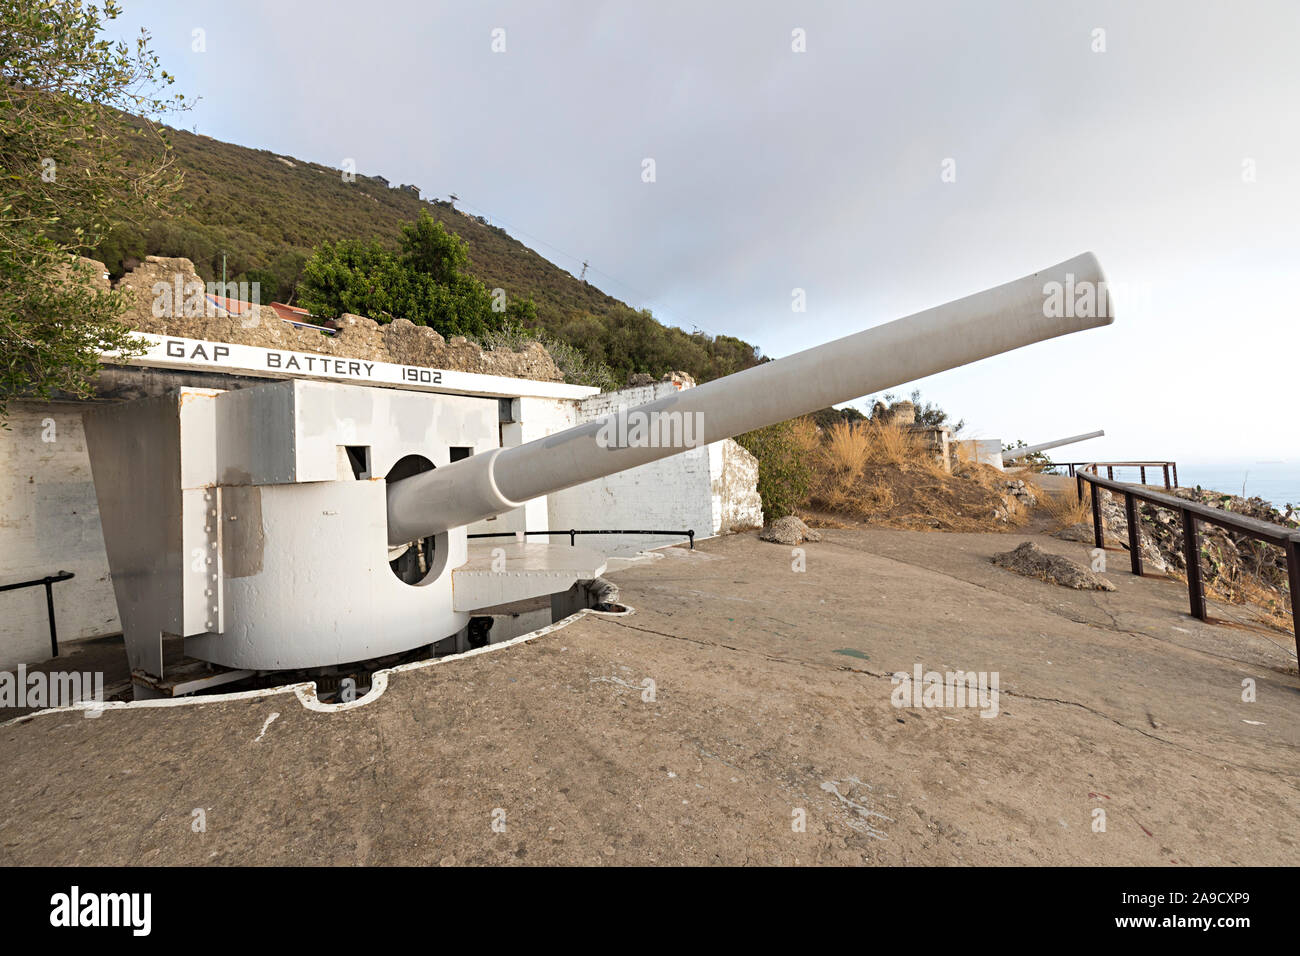 Cannon at Devil's Gap Battery, Gibraltar Stock Photo - Alamy